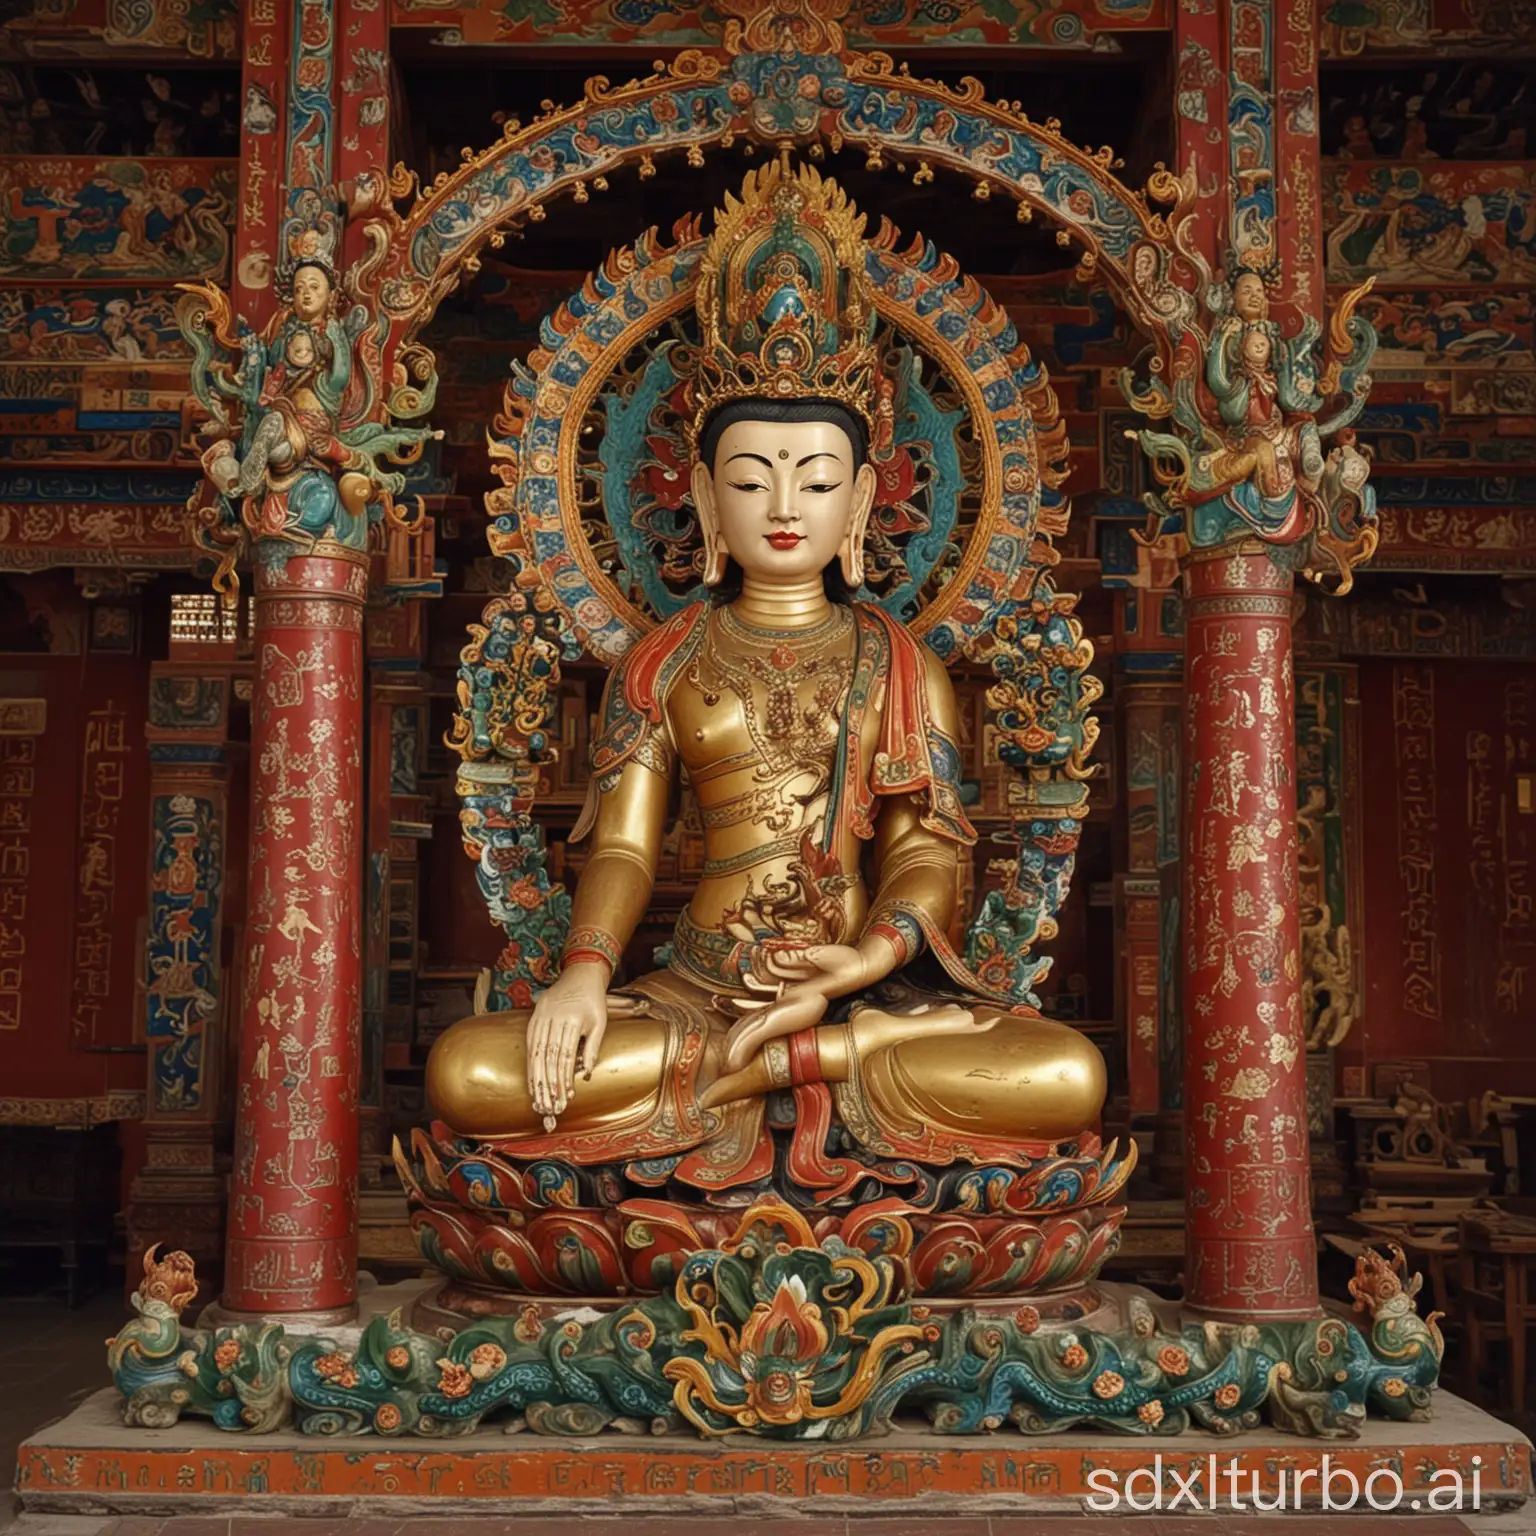 Manjusri-Bodhisattva-Statue-in-Main-Hall-of-Chinese-Temple